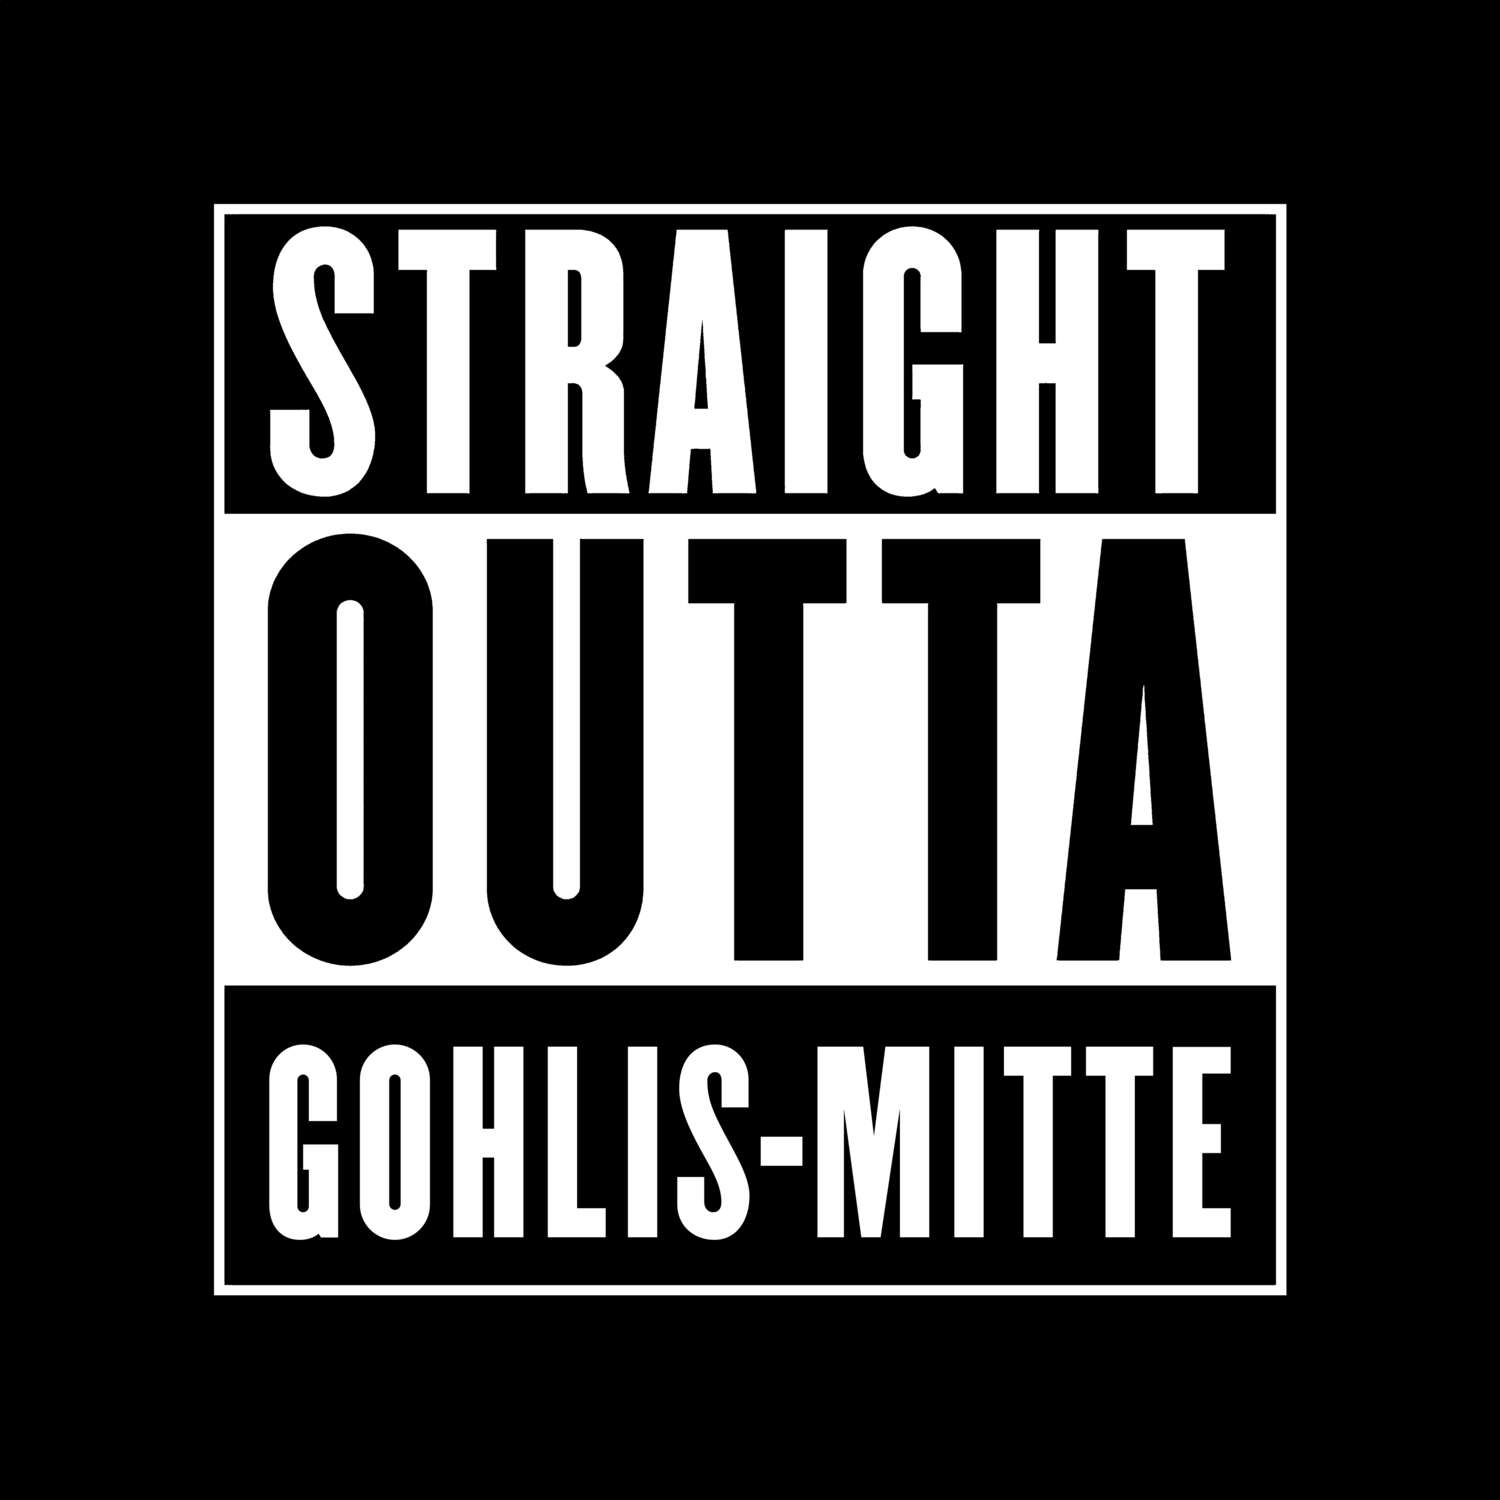 Gohlis-Mitte T-Shirt »Straight Outta«